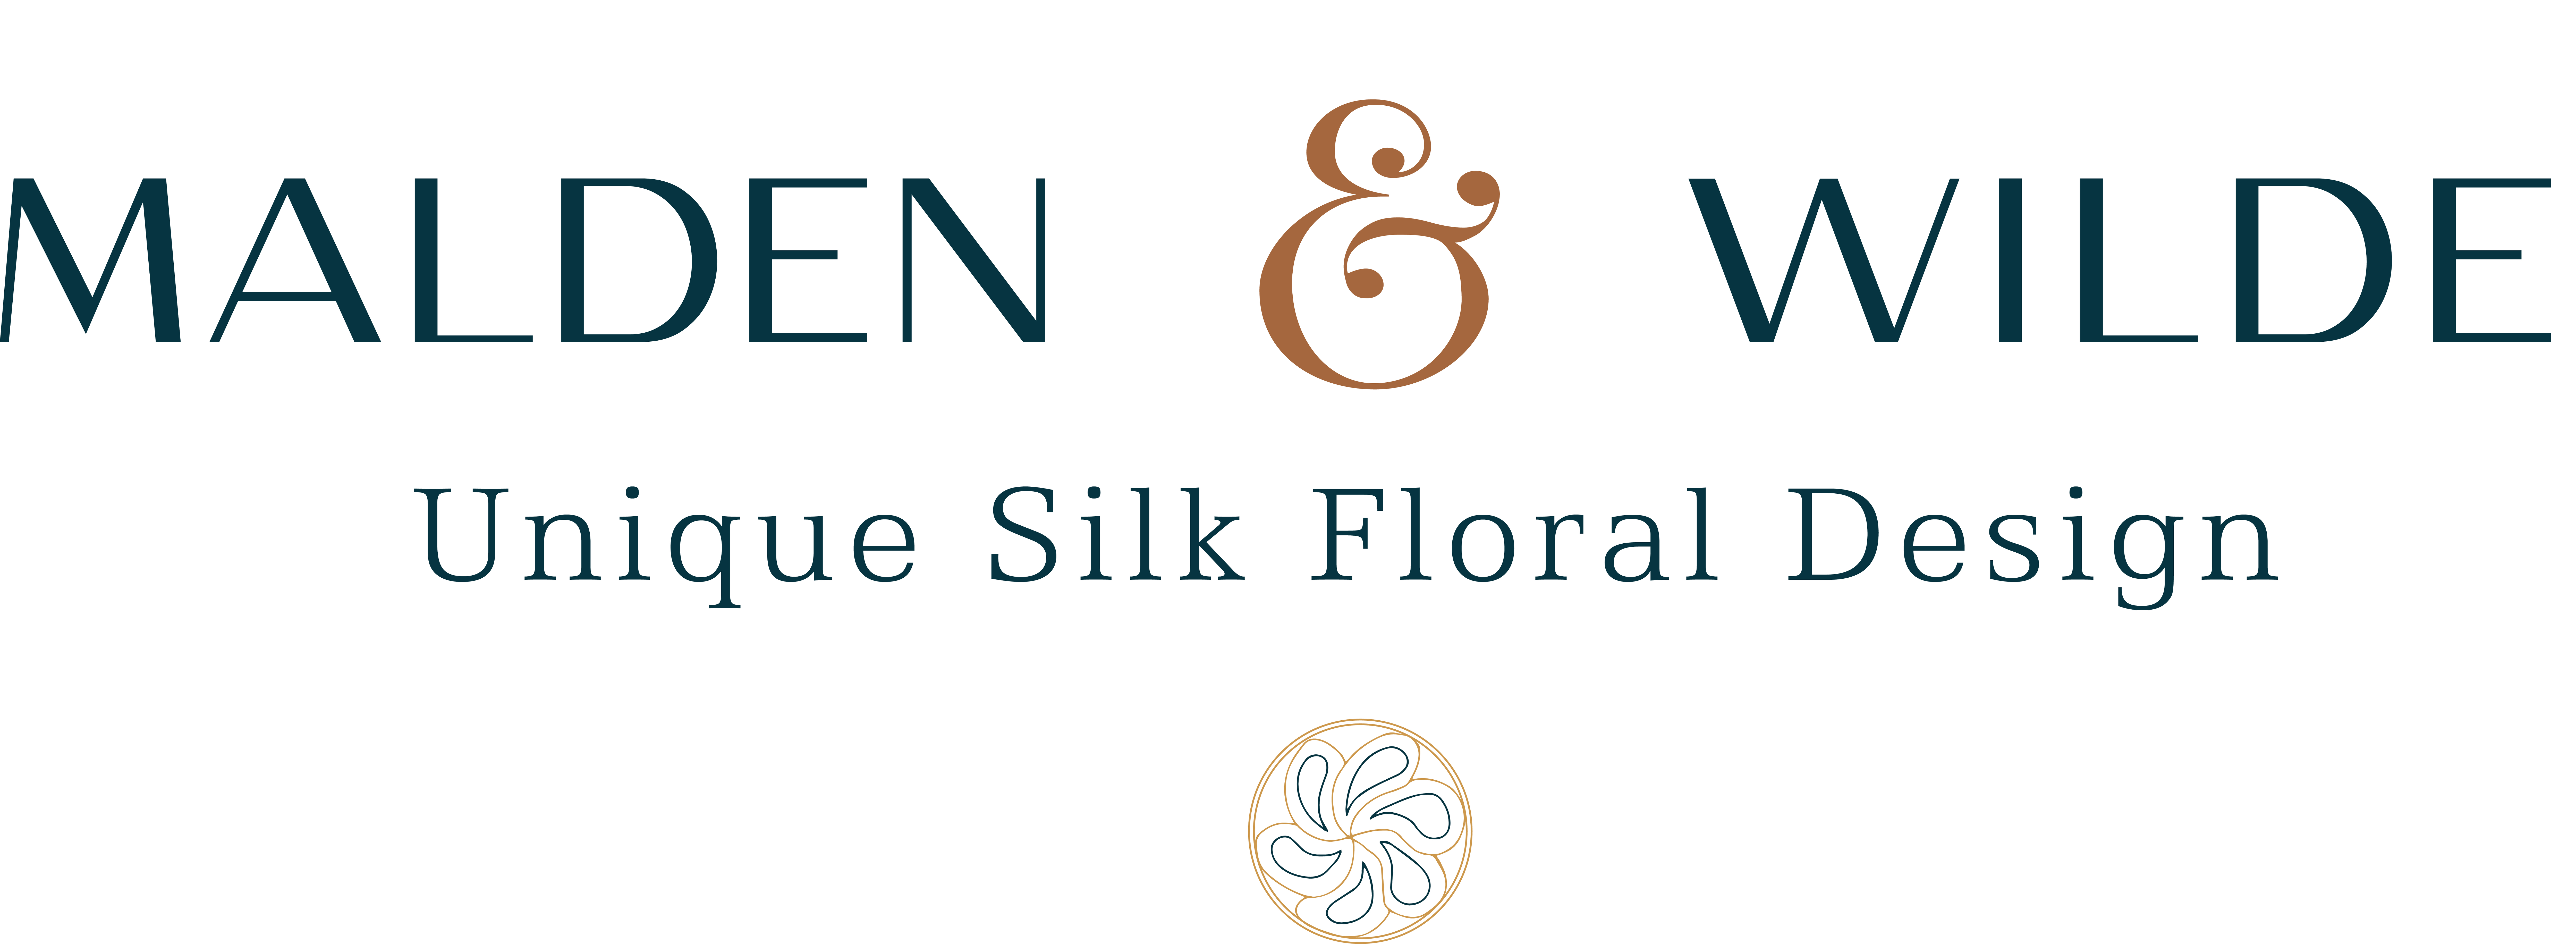 Primary logo for Malden and Wilde silk floral designer
